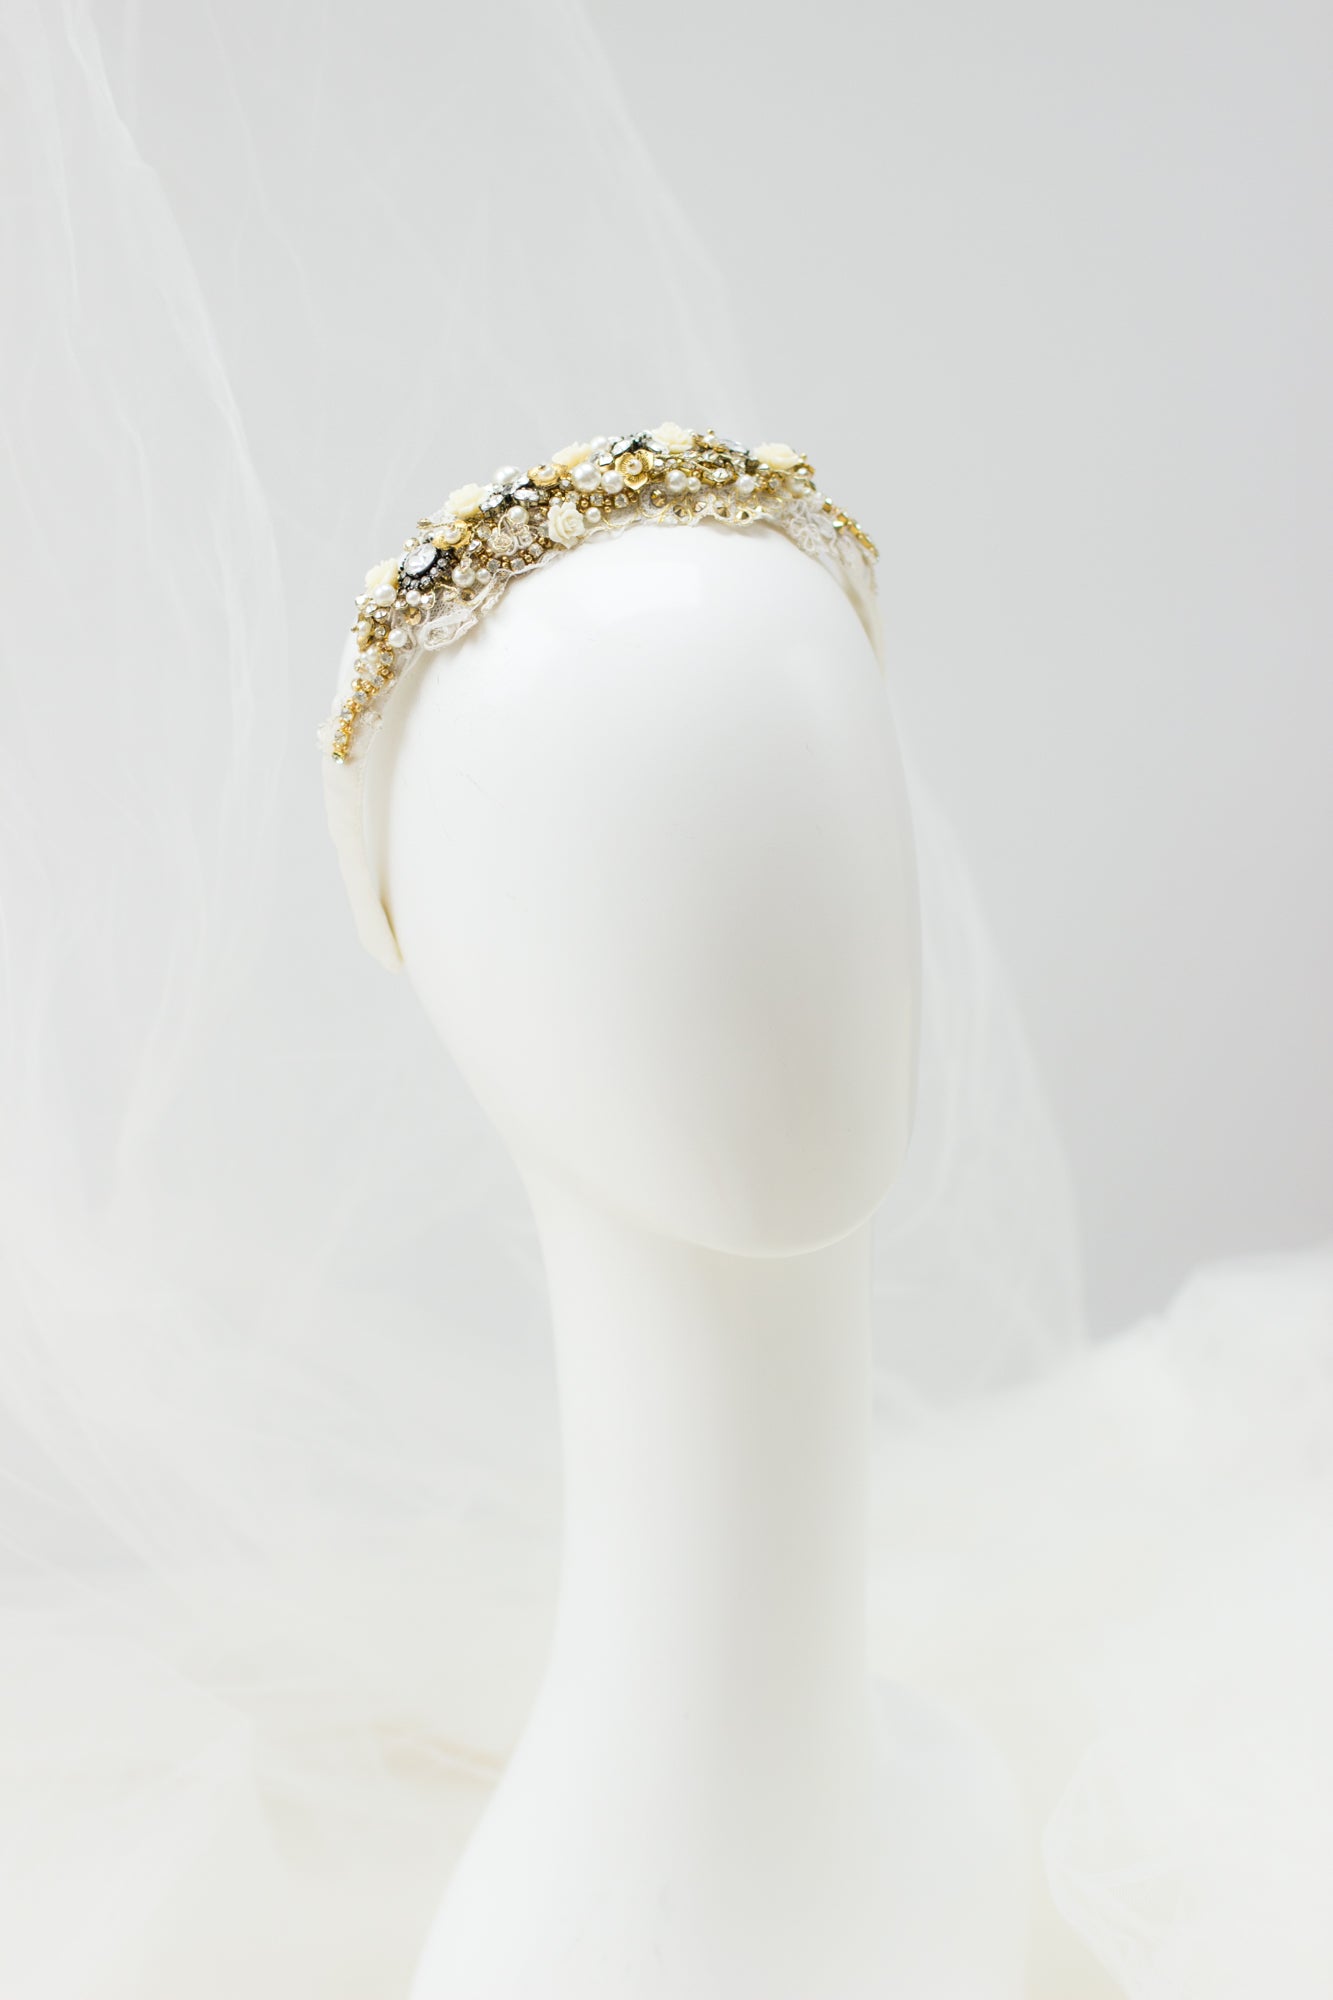 Handmade wedding accessories. Gold headband. Crystal headband. Bridal headpiece. Wedding hair accessories. Rhinestone hairpiece. Head fascinator. Lace headband. online bridal boutique.